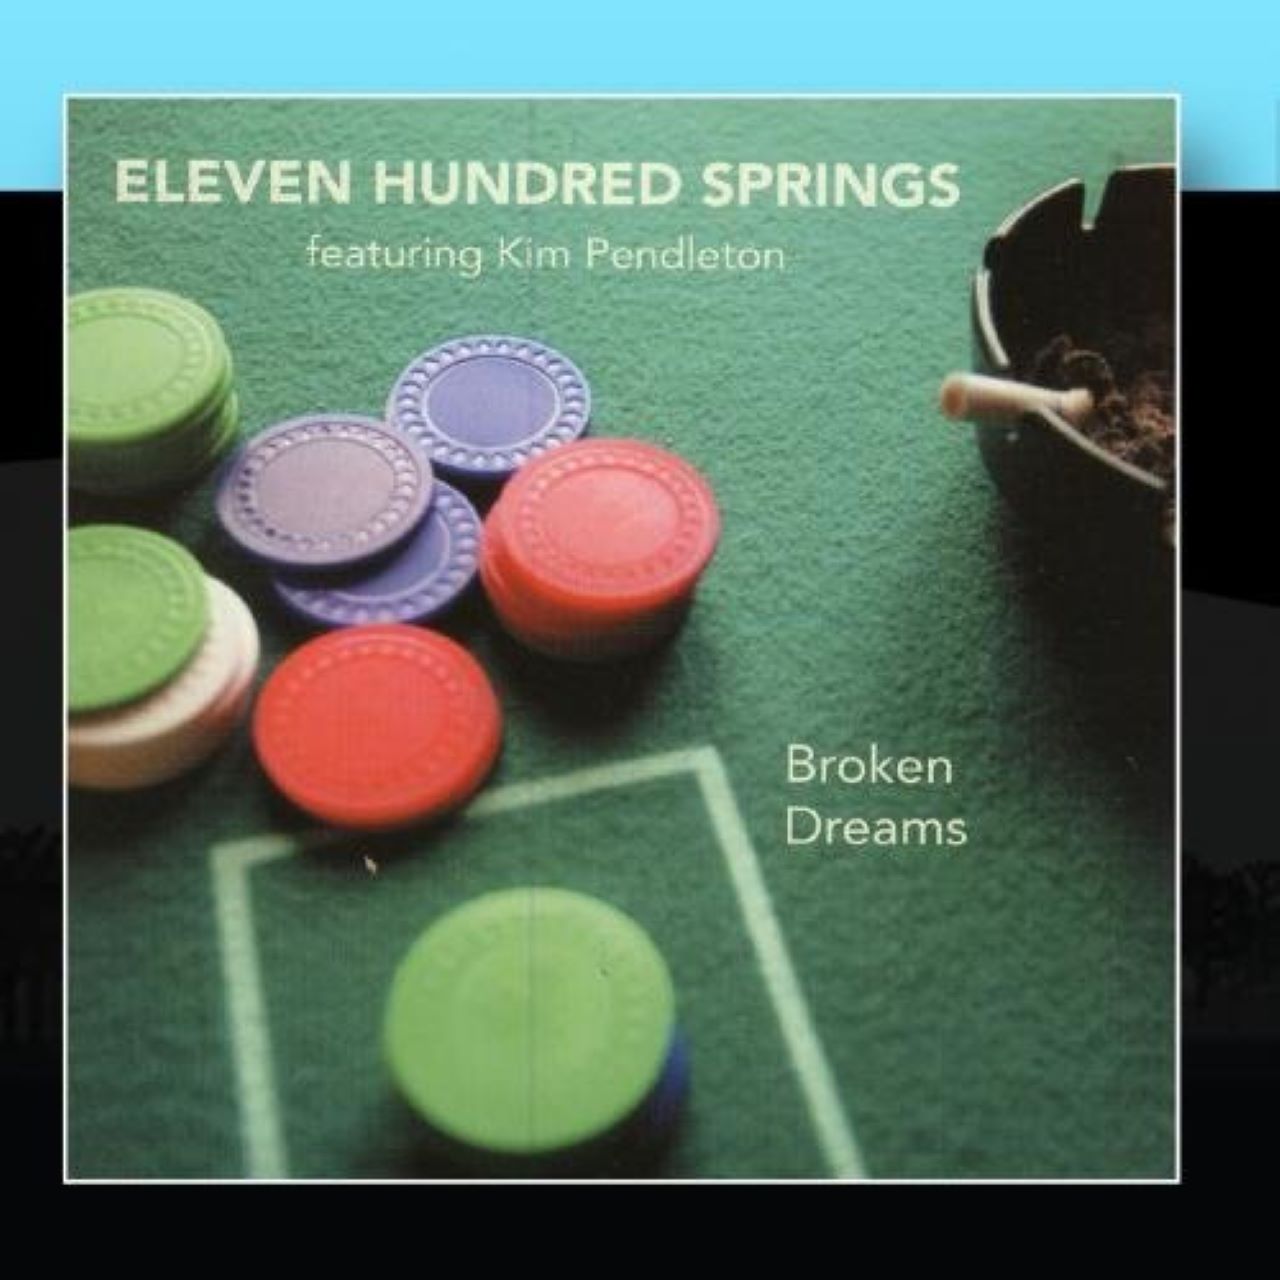 Eleven Hundred Springs featuring Kim Pendleton - Broken Dreams cover album